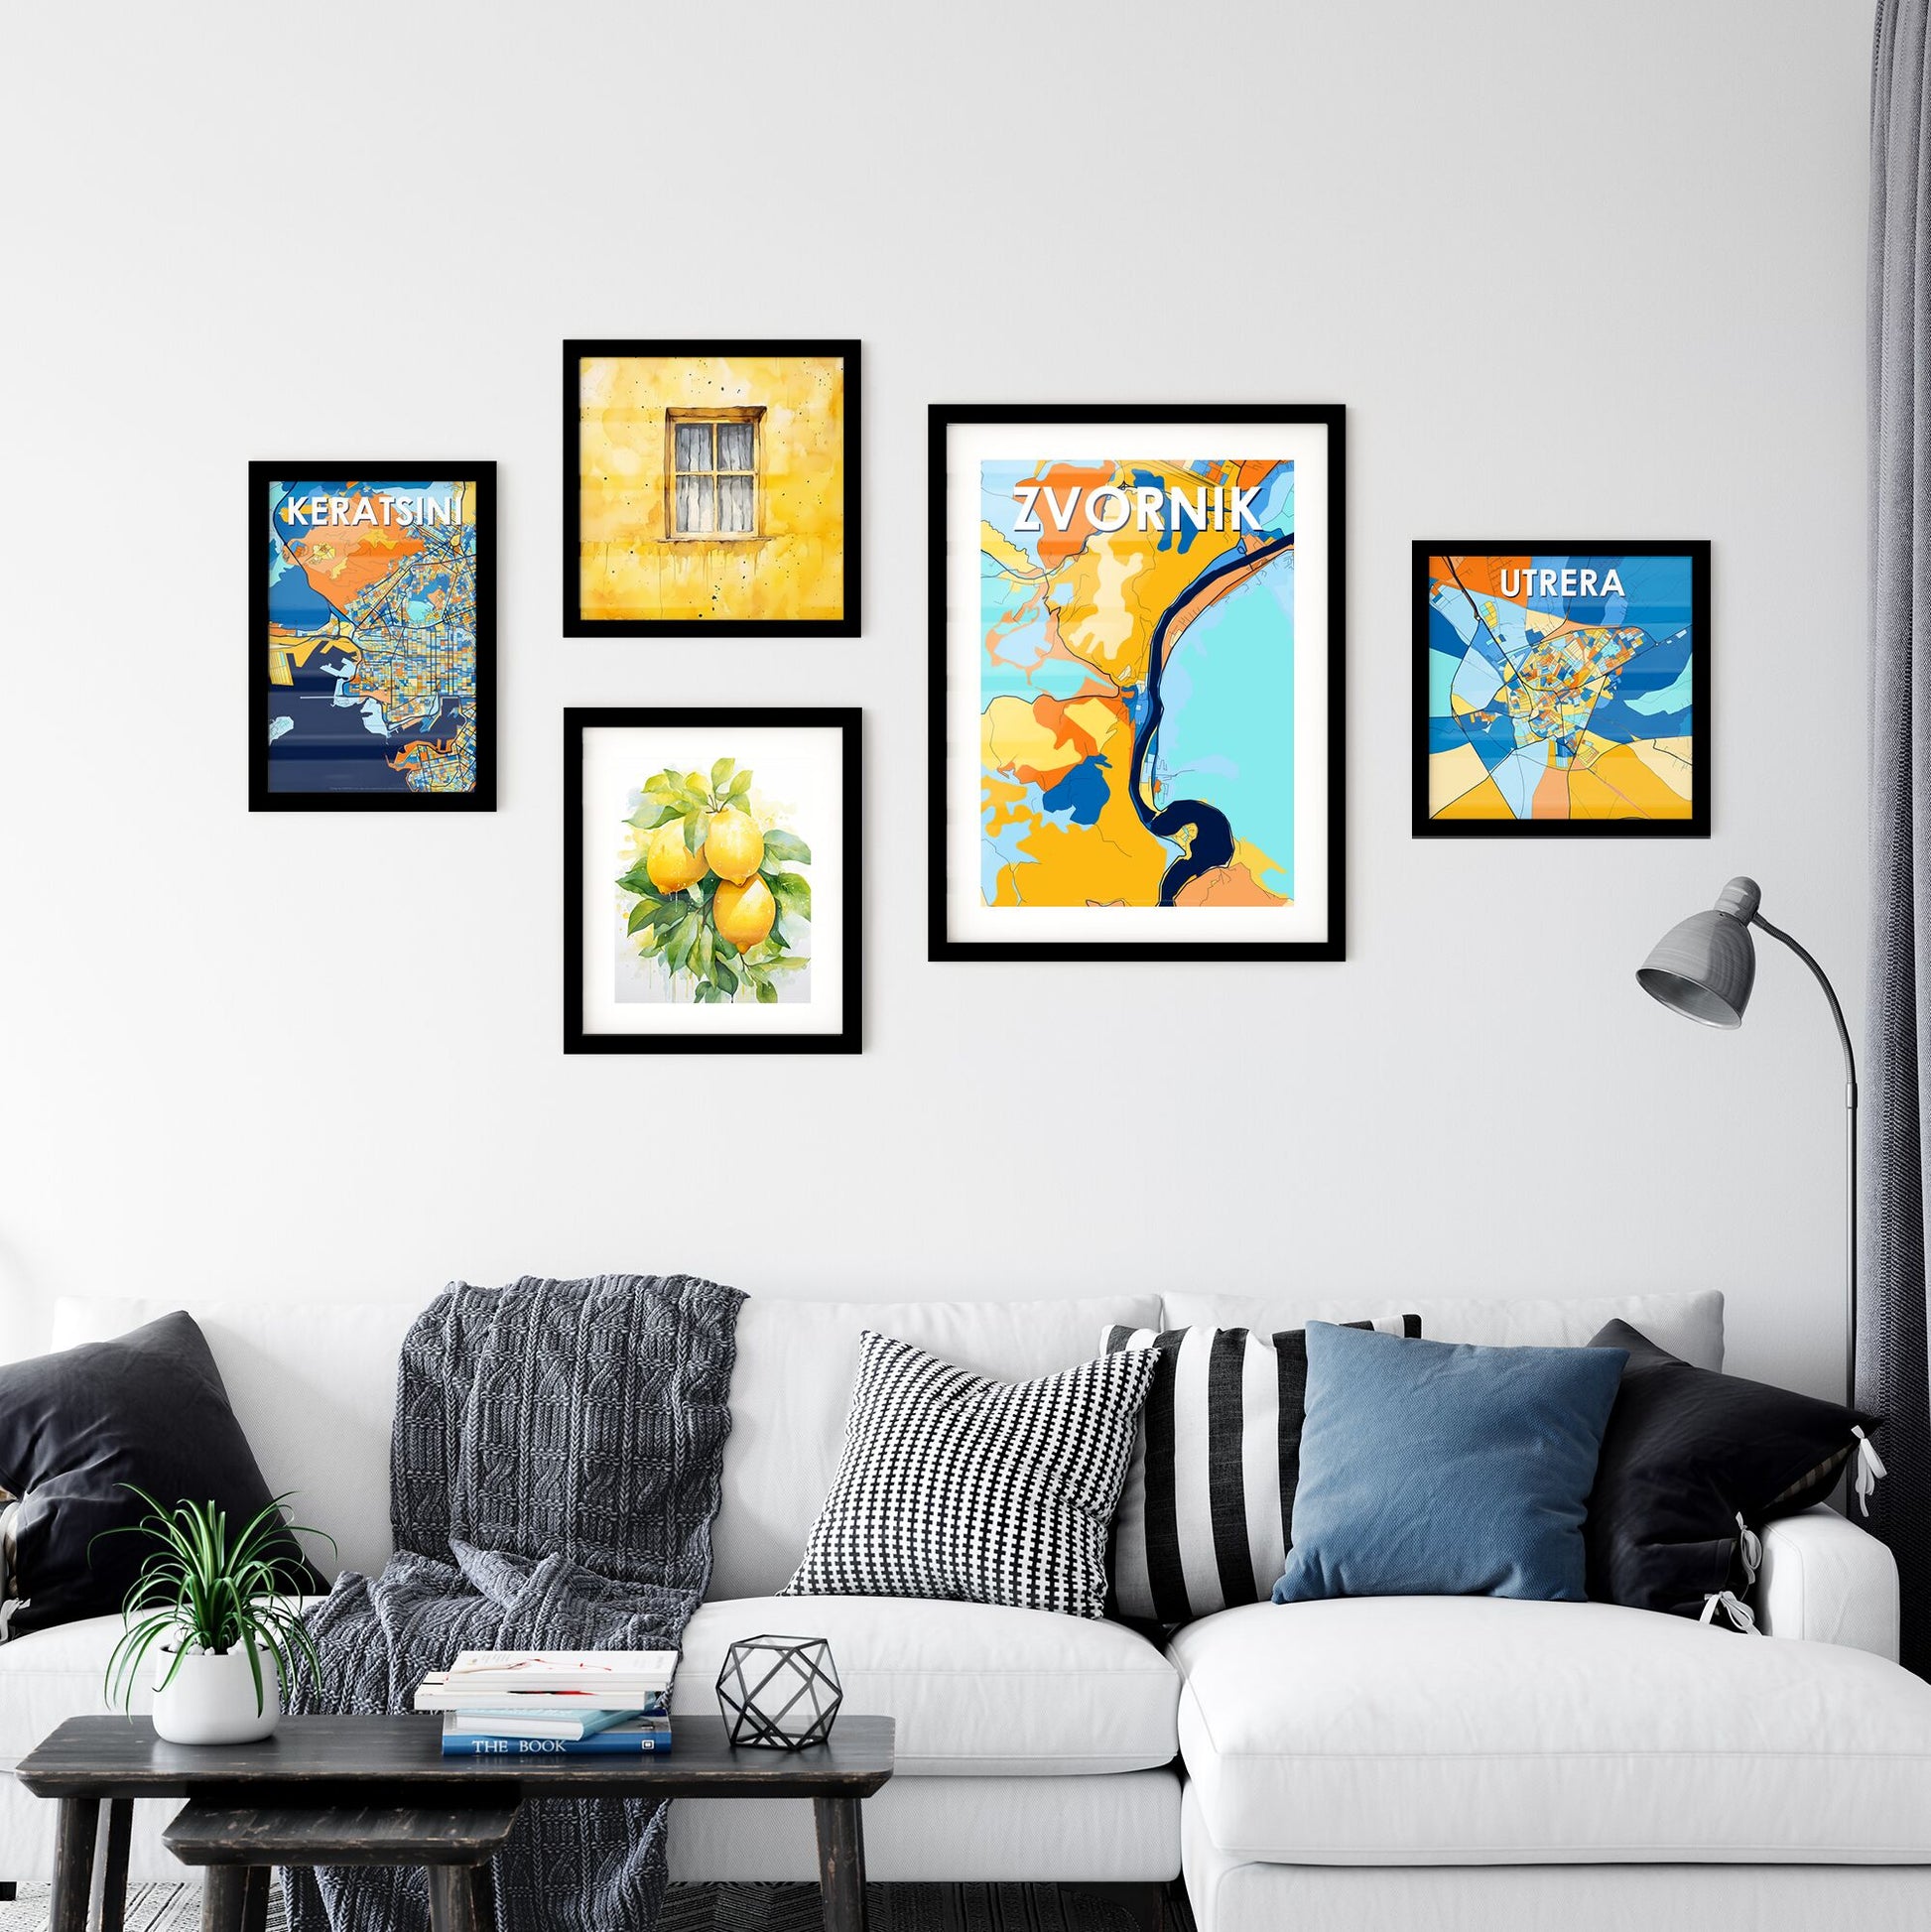 ZVORNIK BOSNIA AND HERZEGOVINA Vibrant Colorful Art Map Poster Blue Orange